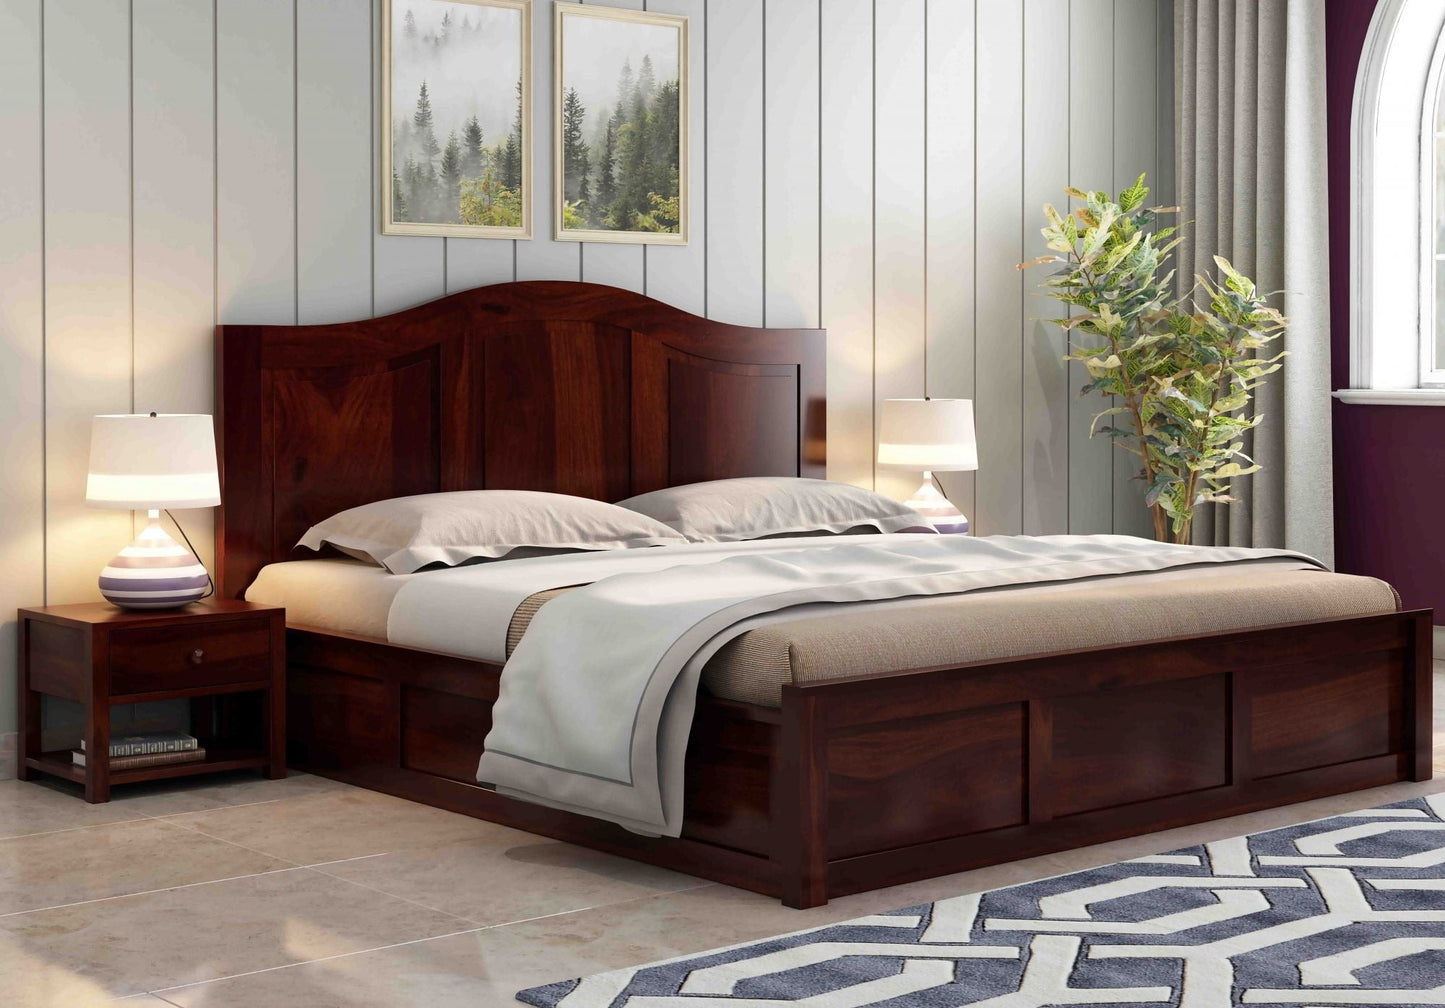 Nectar Sheesham Wood Bed with Box Storage - Torque India